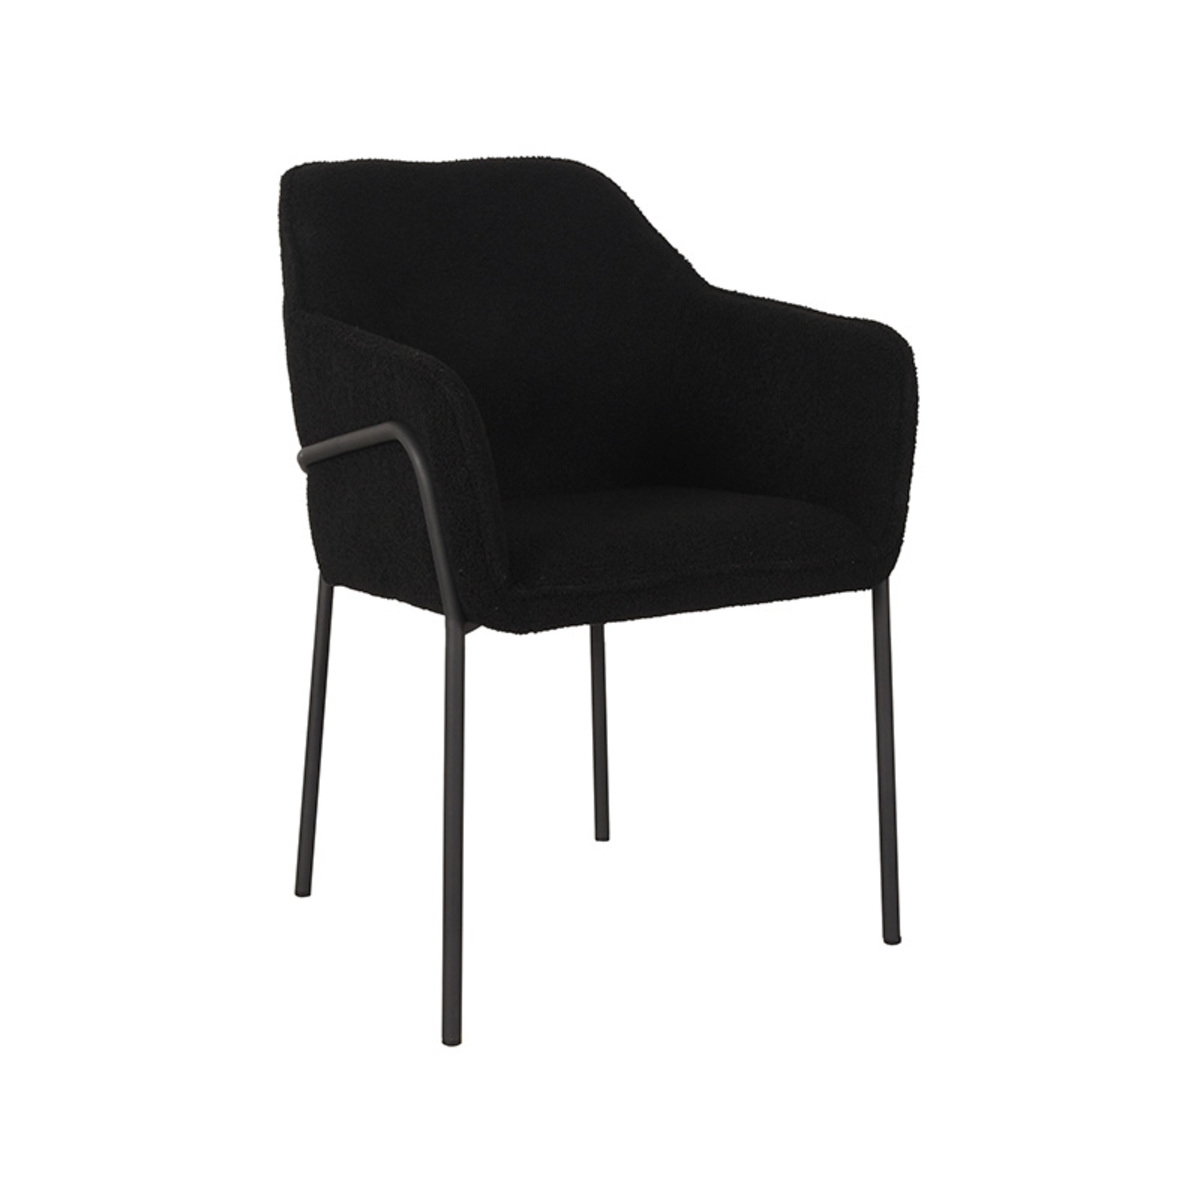 https://www.label51.nl/media/catalog/product/D/i/Dining_Chair_Dexter_66x62x85_cm_Perspectief.jpg